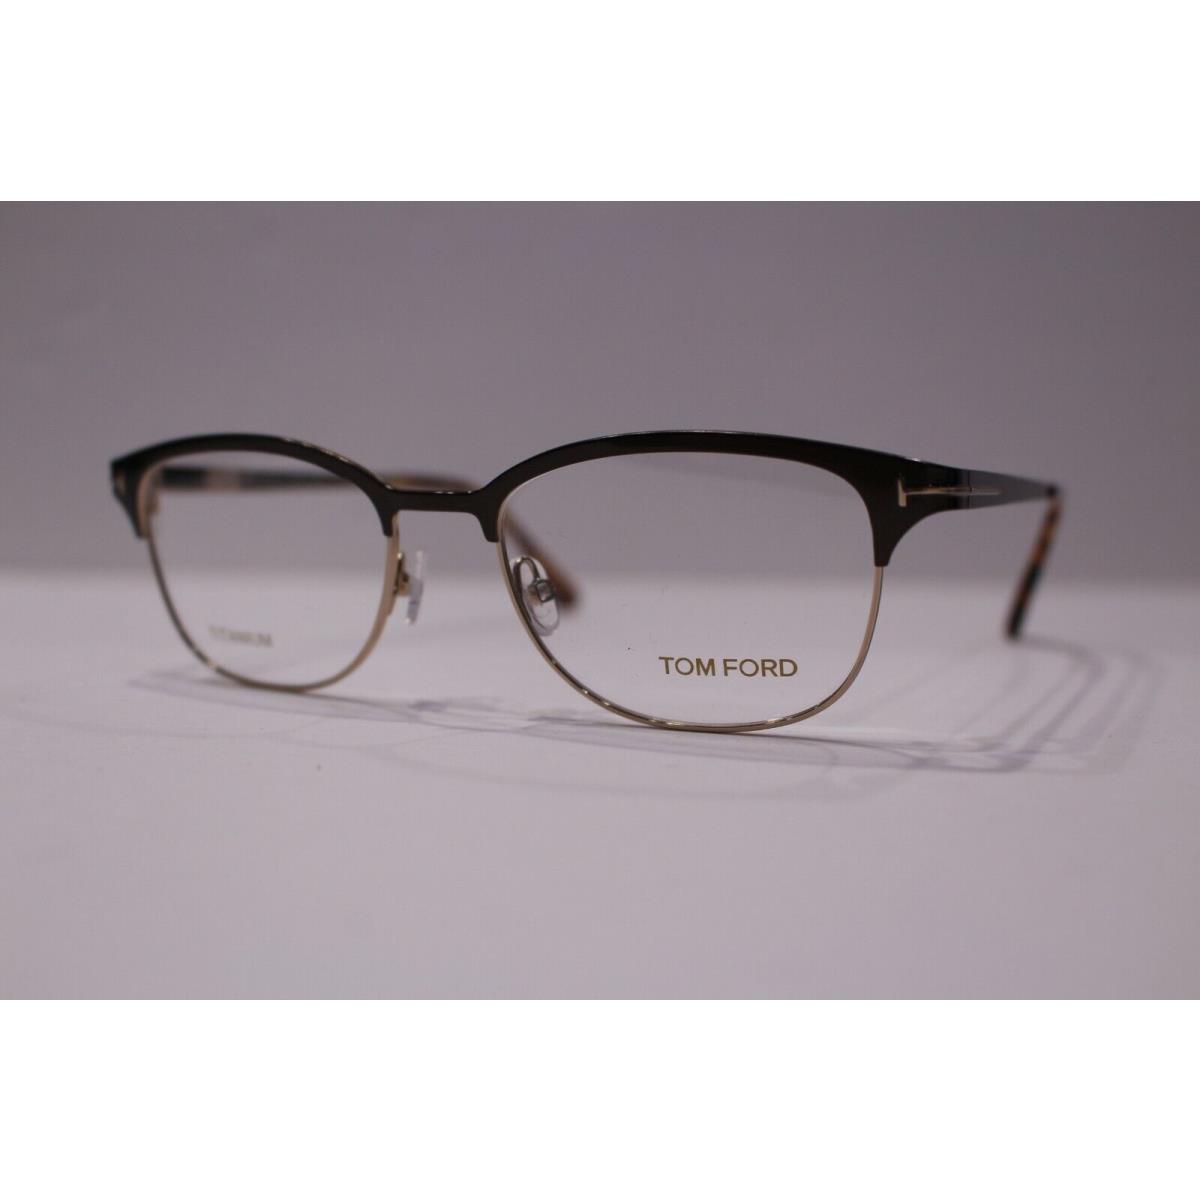 Tom Ford Eyeglasses TF5381 050 Metallic Brown-light Havana 52mm